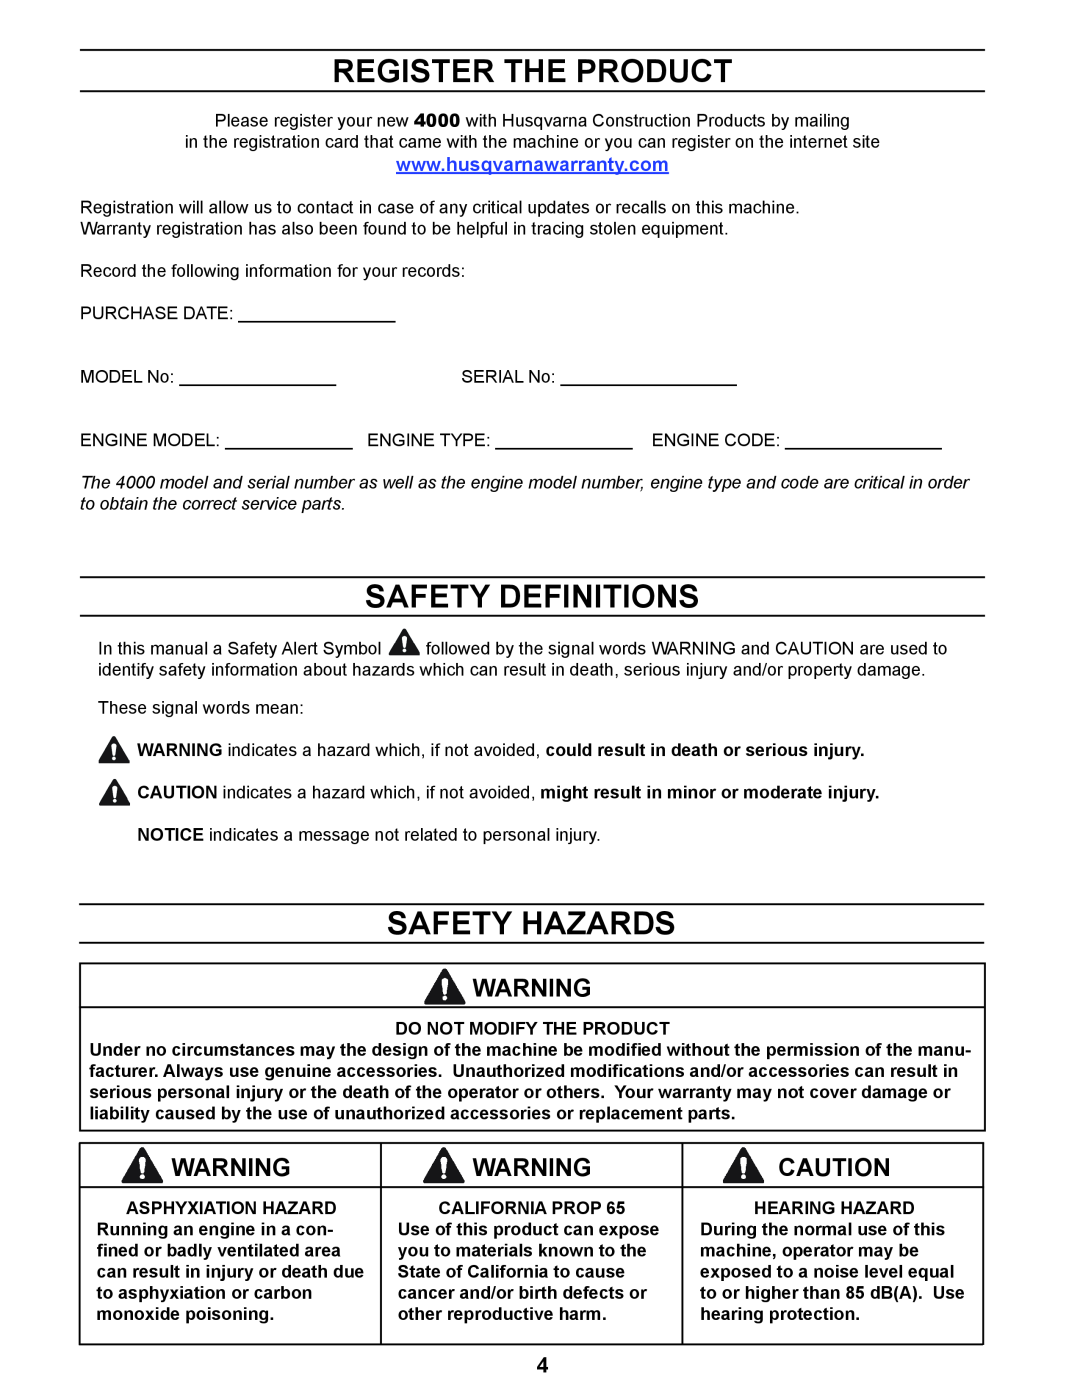 Husqvarna 4000 manuel dutilisation Register The Product, Safety Definitions, Safety Hazards 